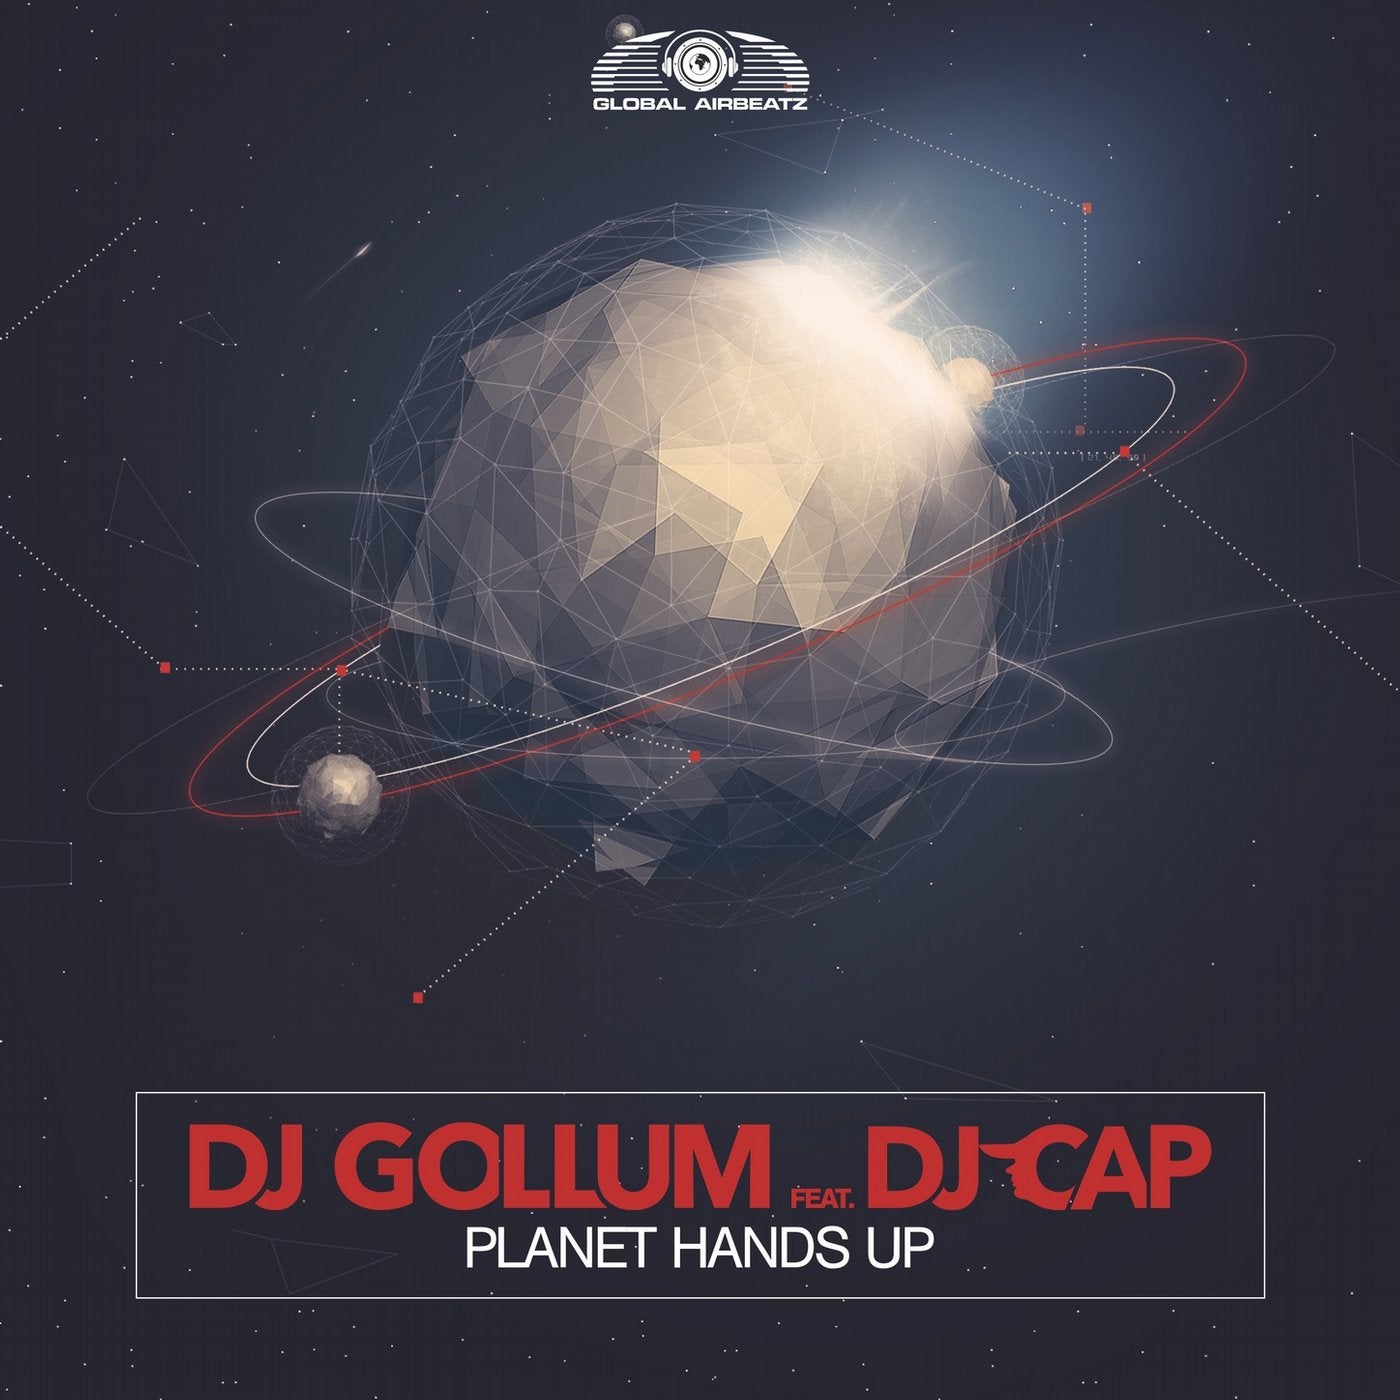 Planet Hands Up